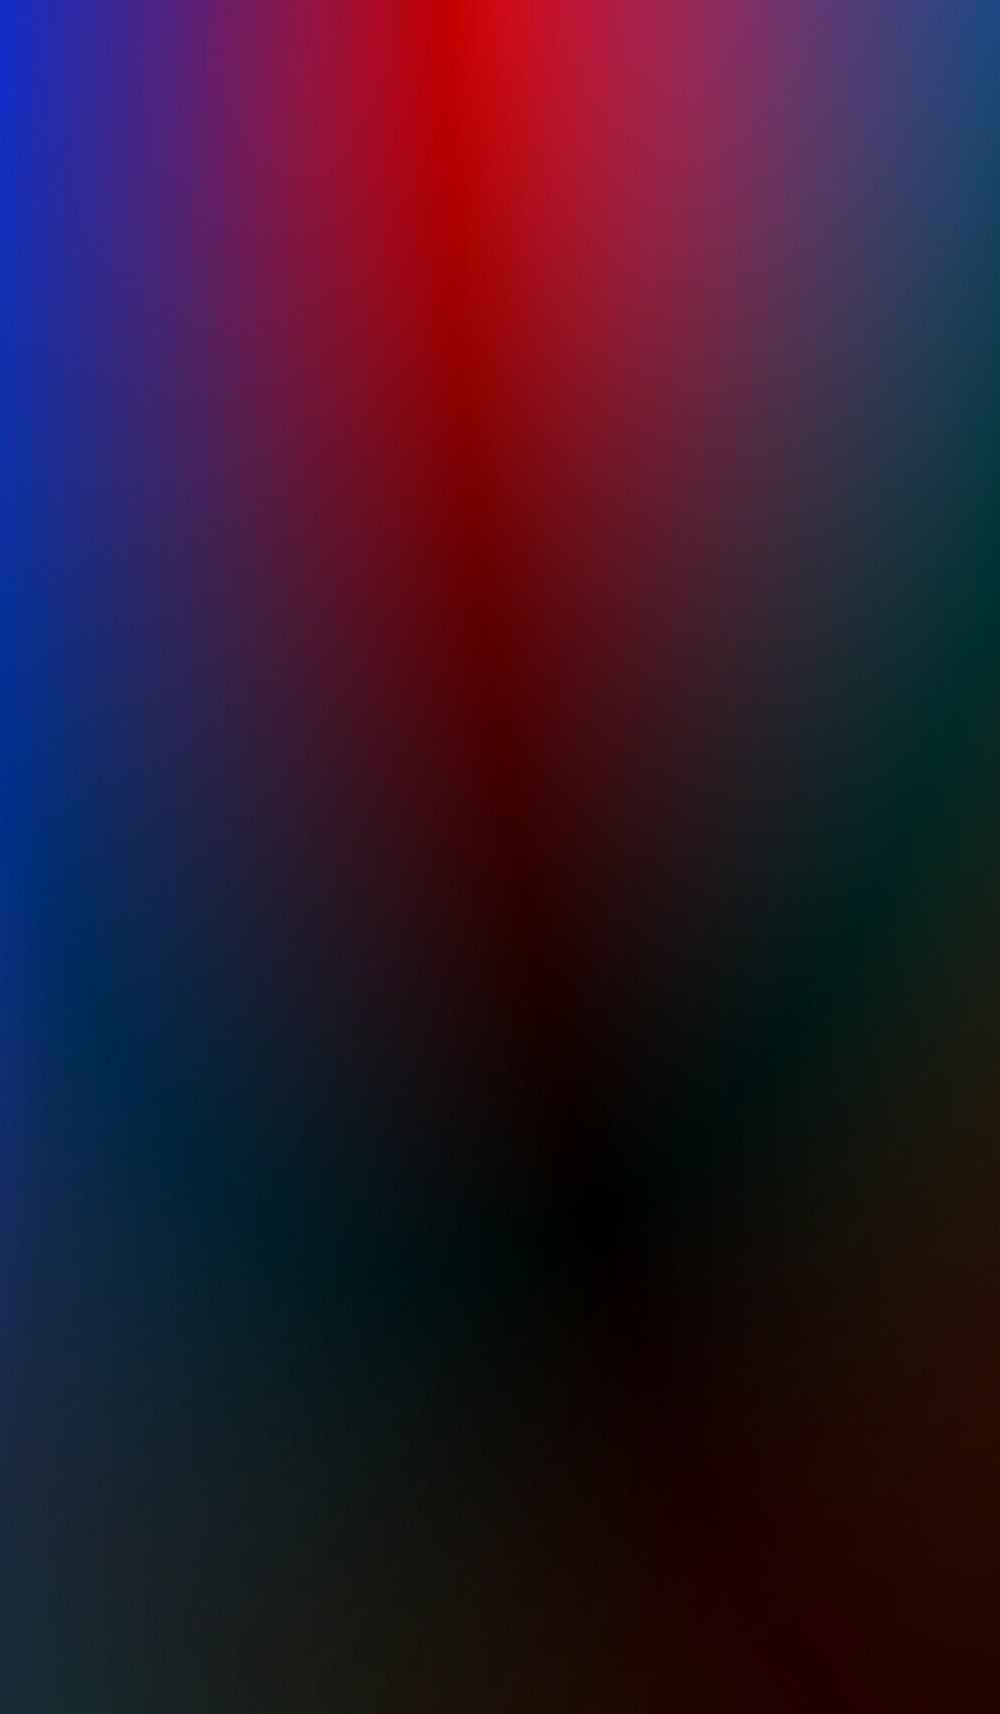 red light on blue background photo – Free Lighting Image on Unsplash